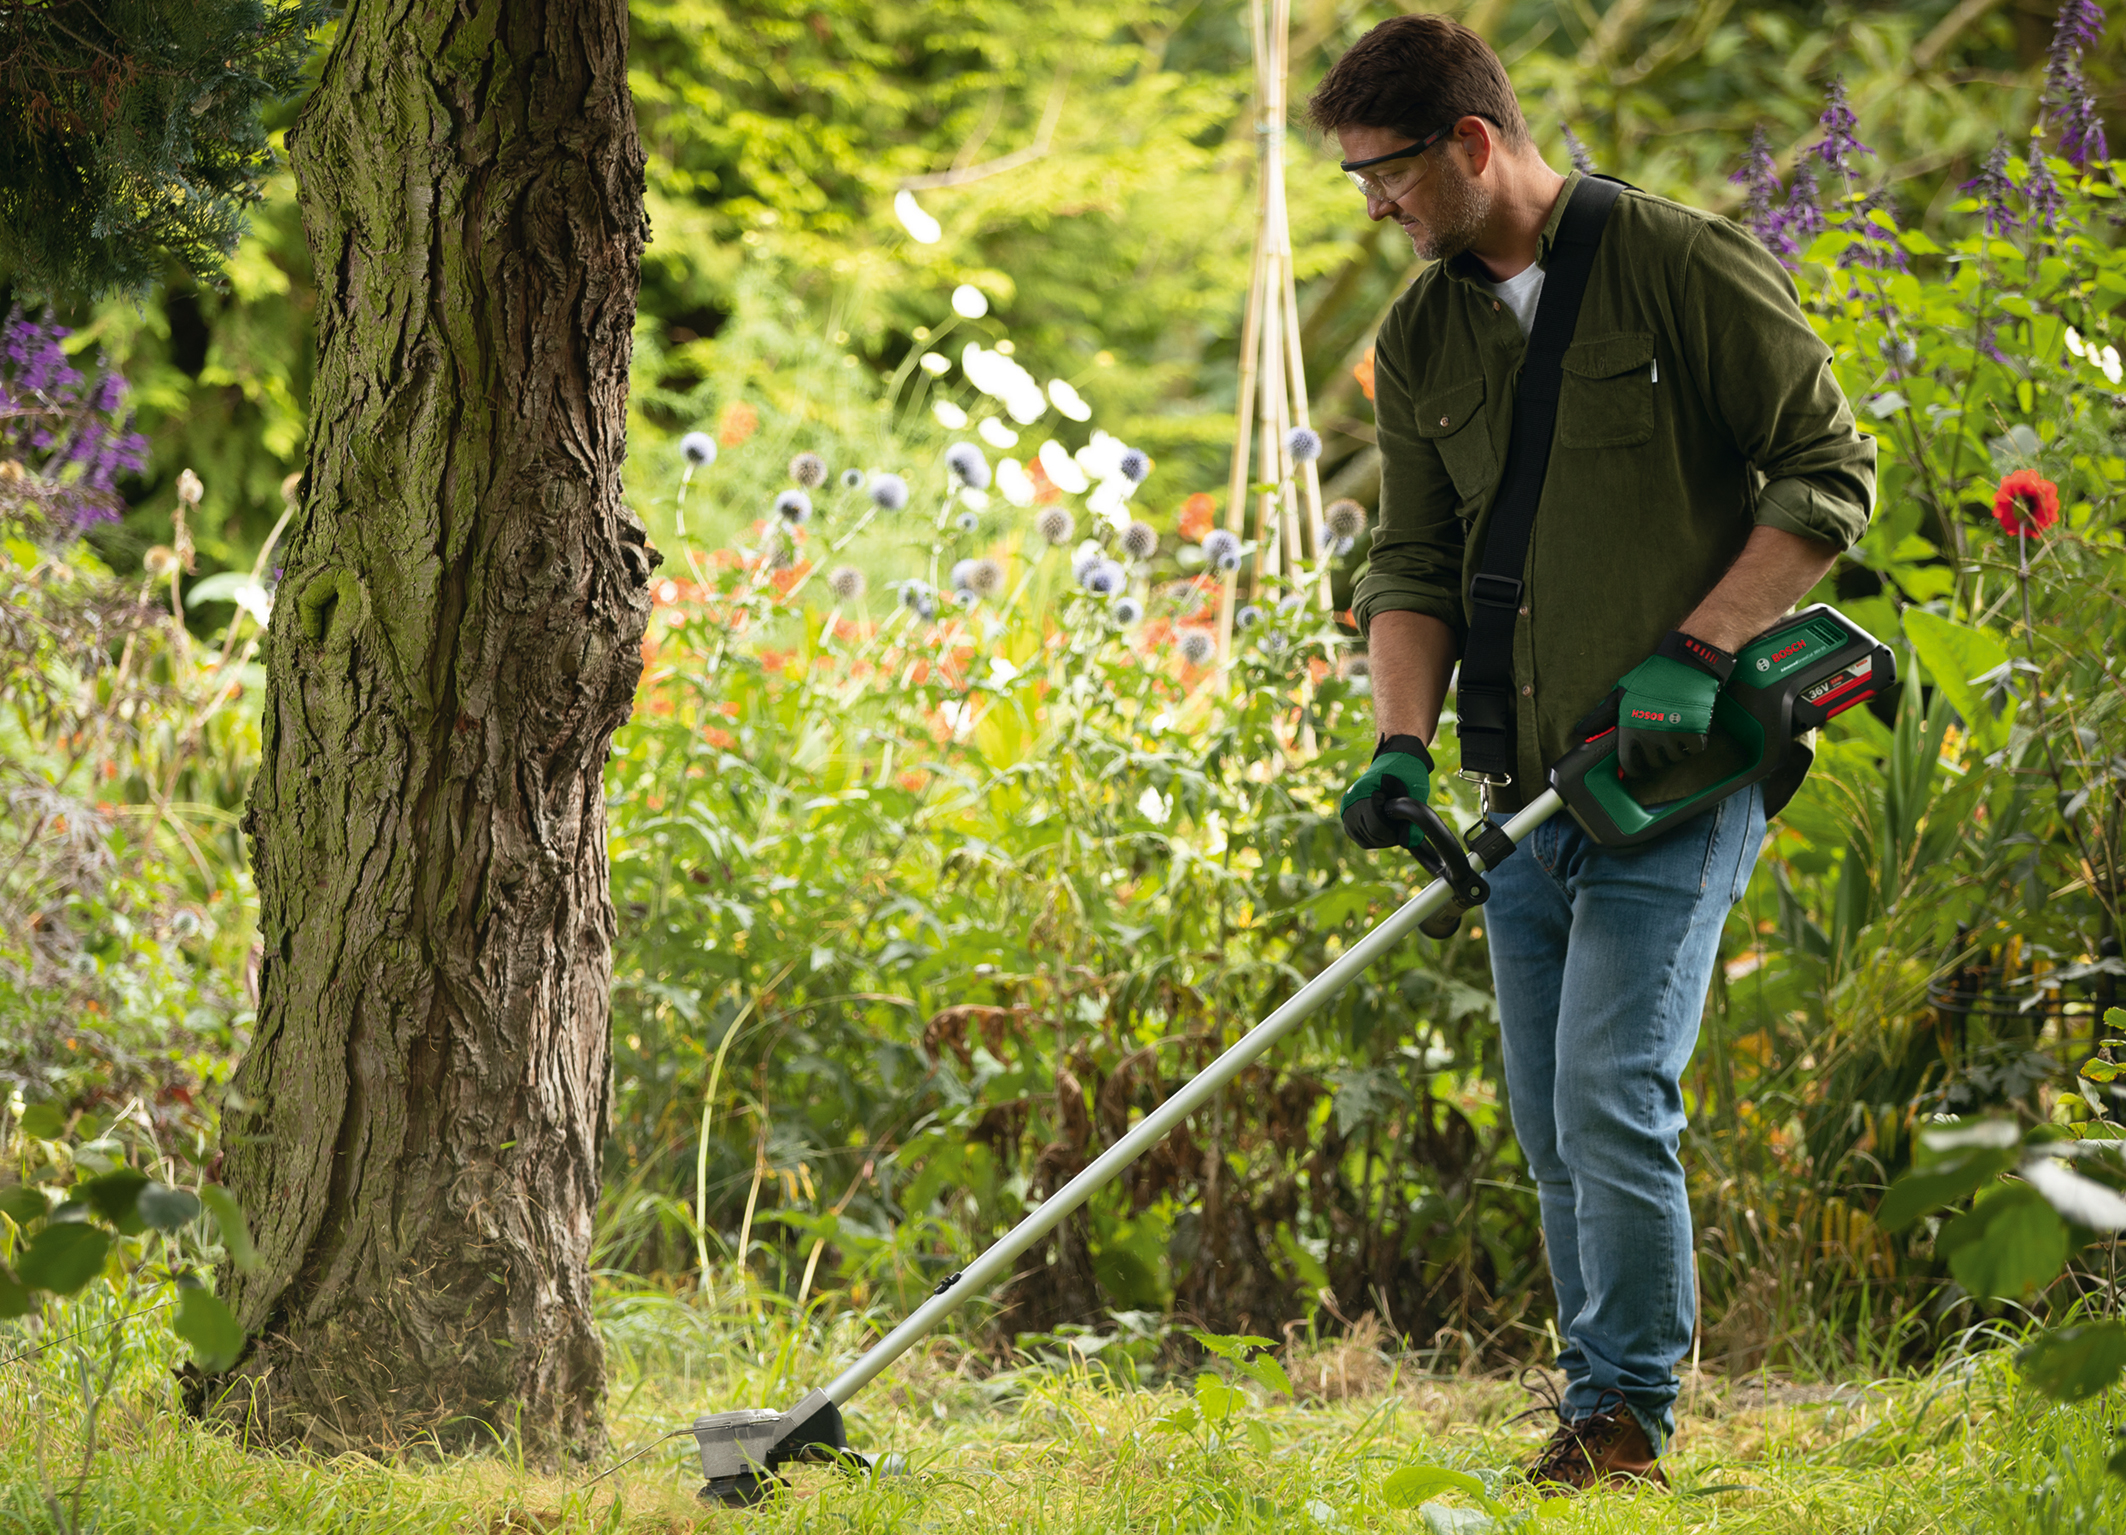 Start the gardening season with full power: AdvancedGrassCut 36V-33 cordless grass trimmer from Bosch